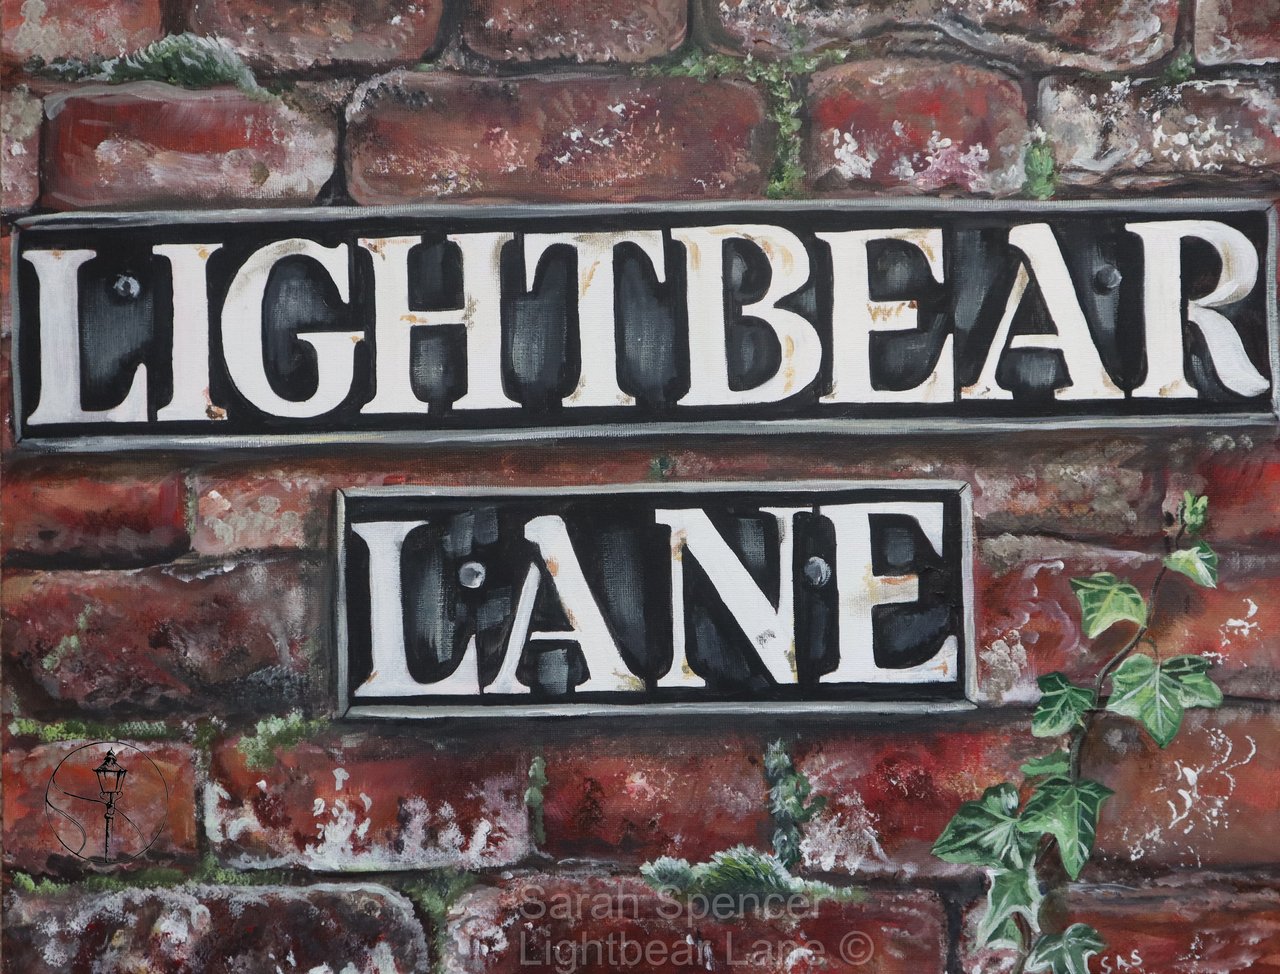 Lightbear Lane street name sign, acrylic on canvas board